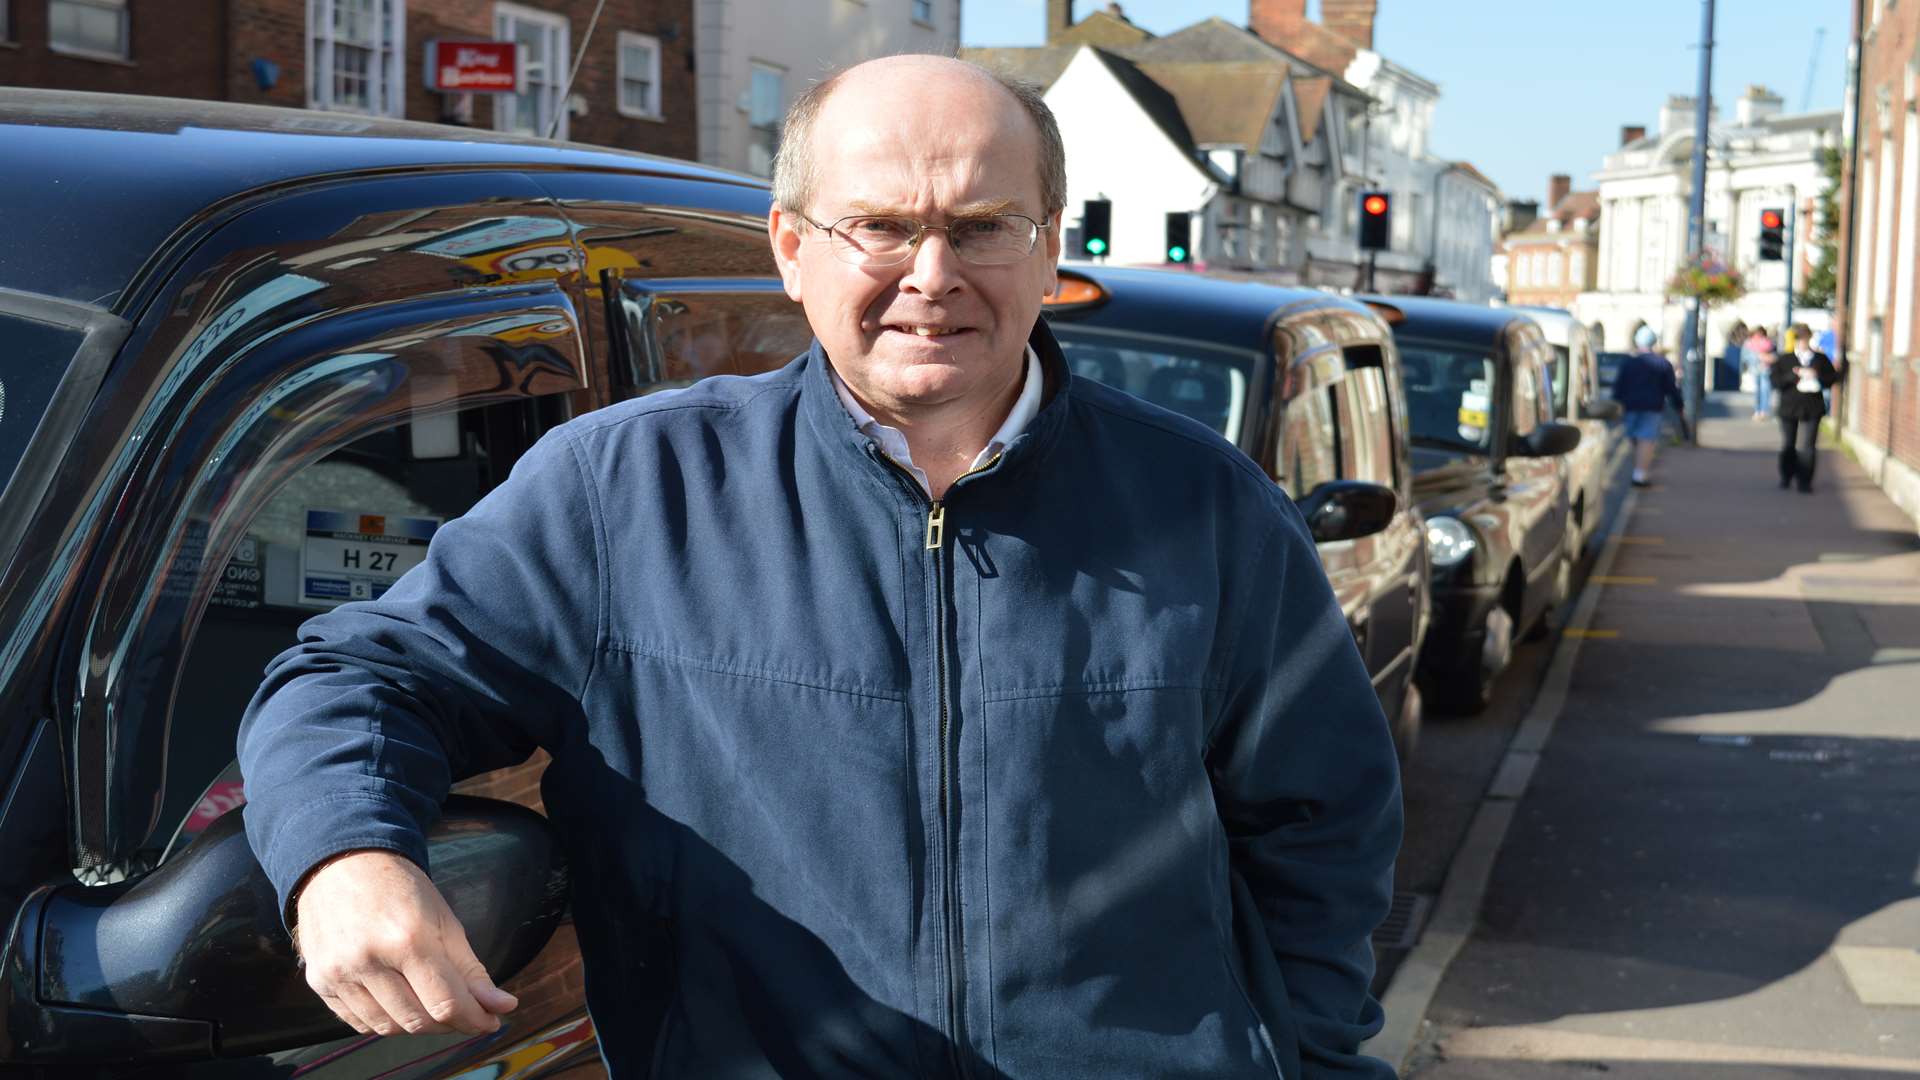 Neil Cox, of the Maidstone Taxi Proprietors Association